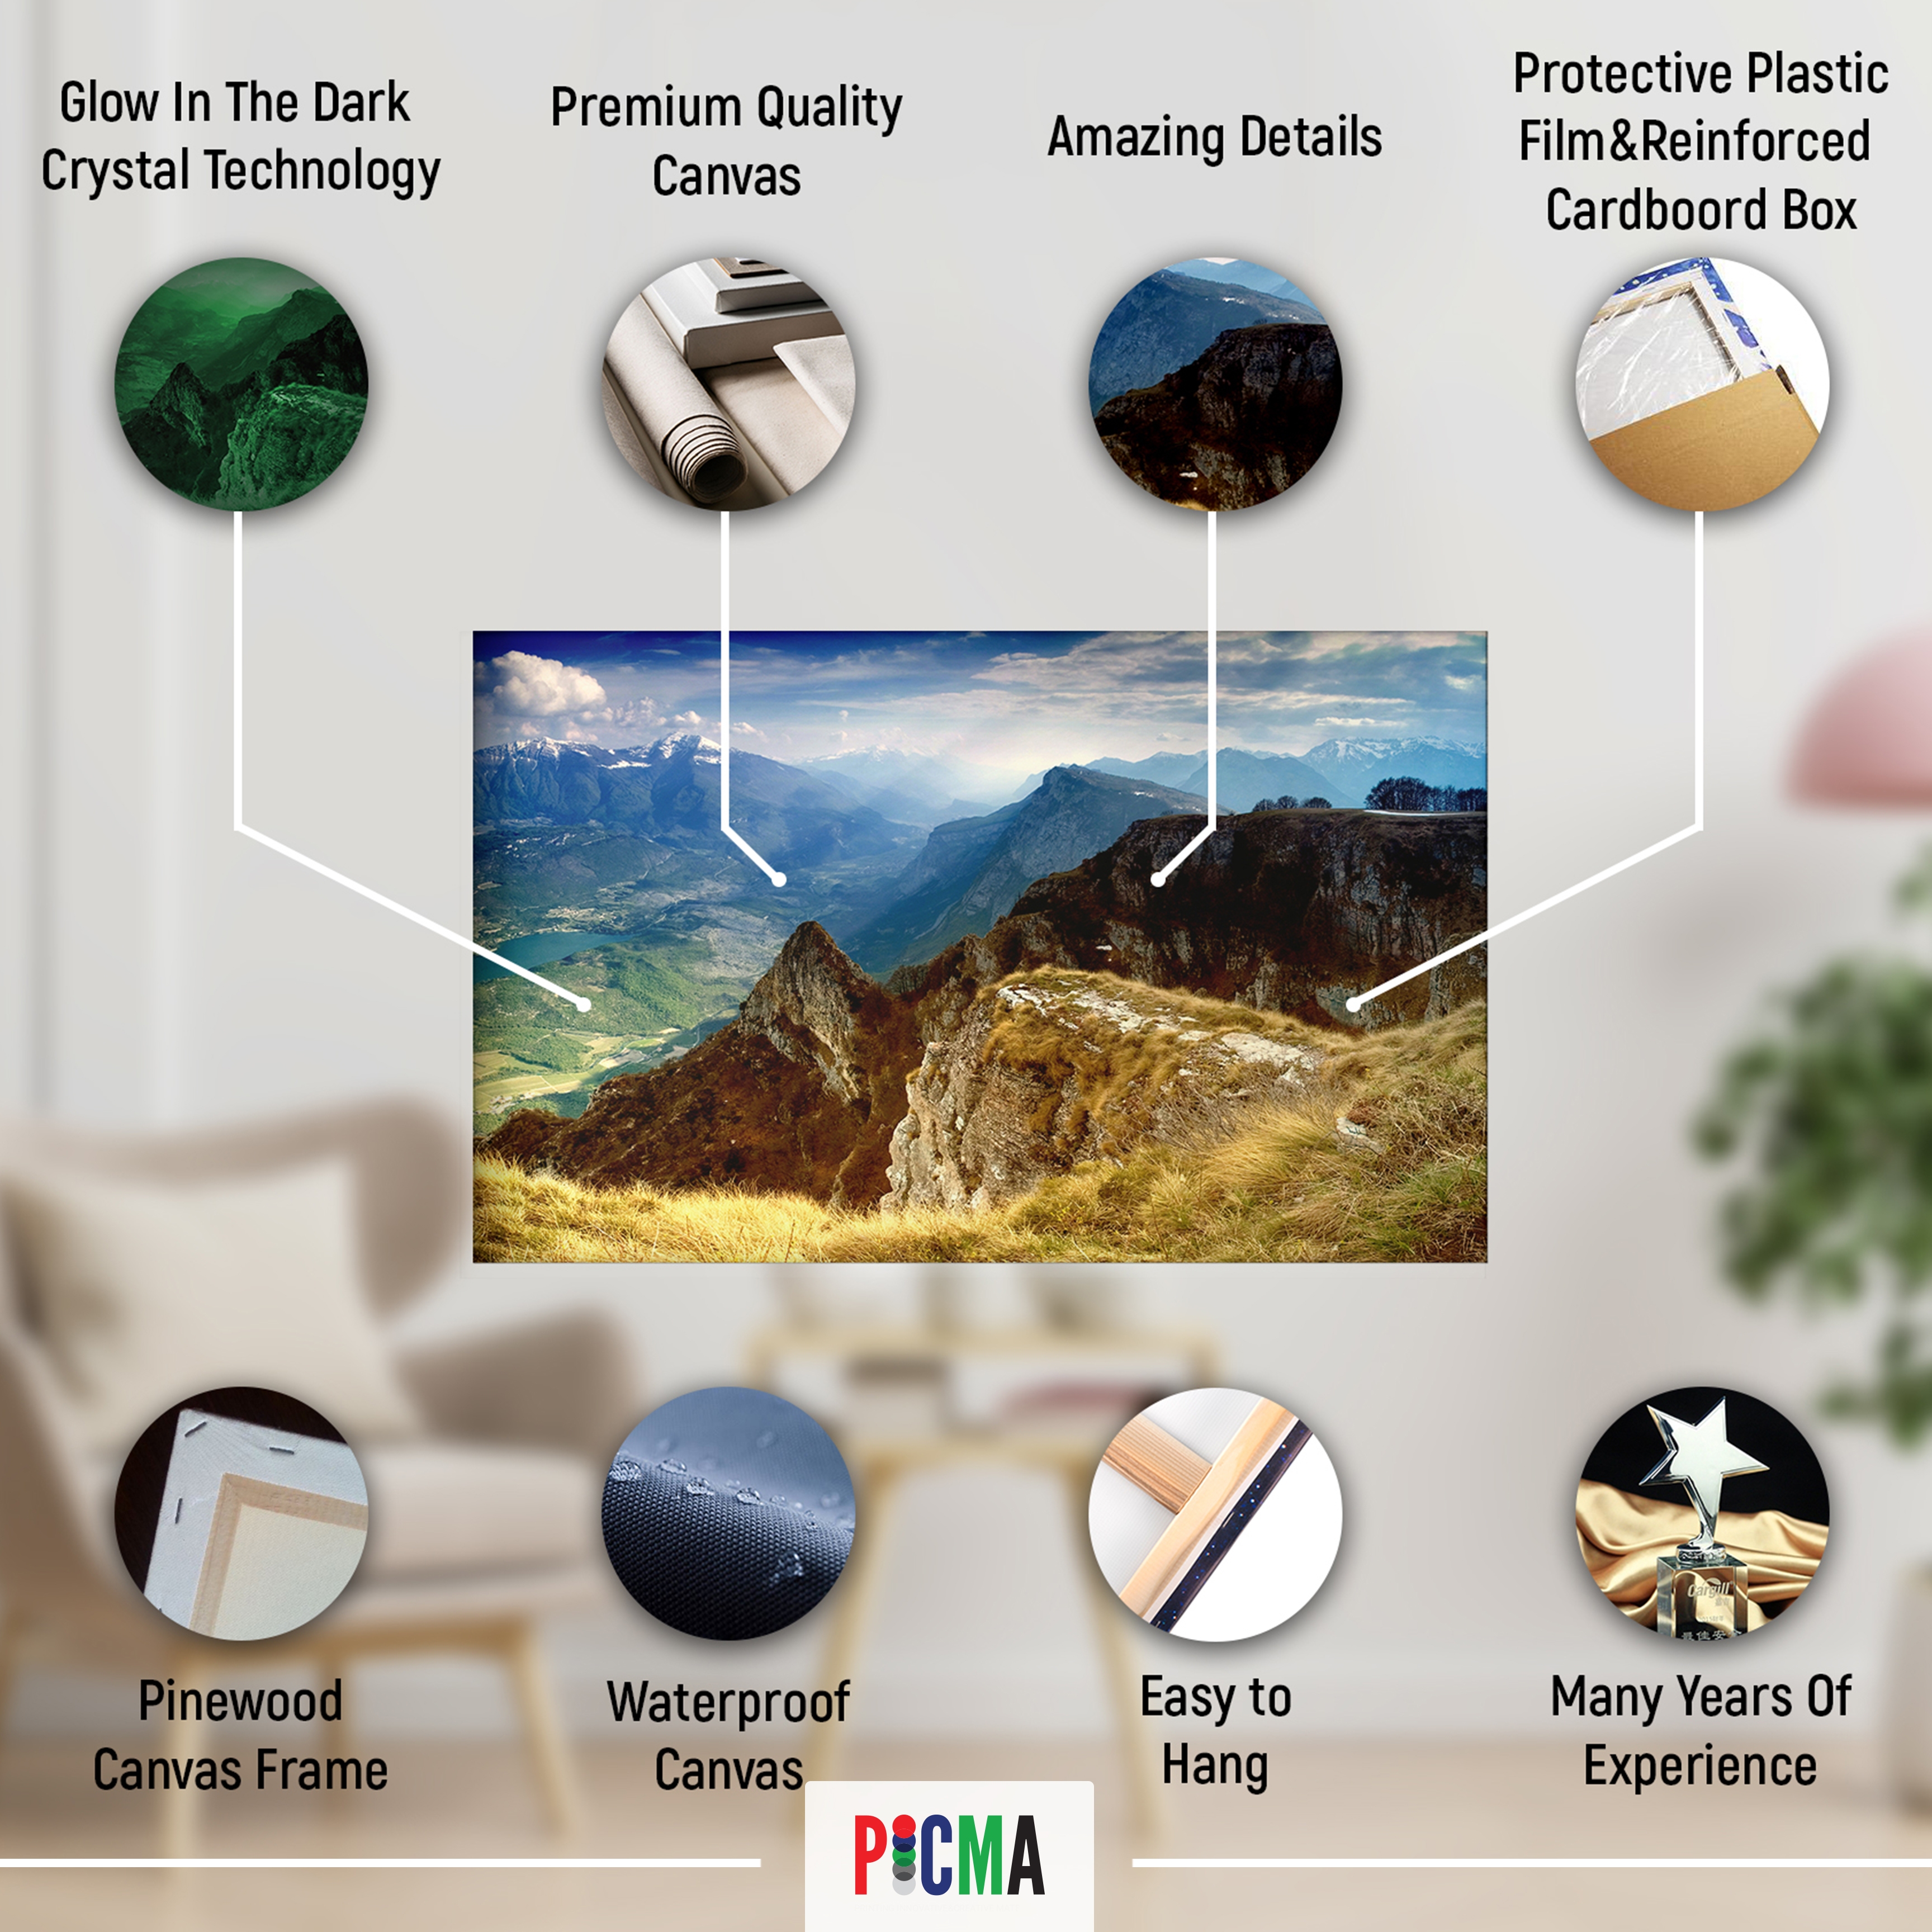 Tablou canvas luminos Peisaj montan, Picma, dualview, panza + sasiu lemn, 80 x 120 cm